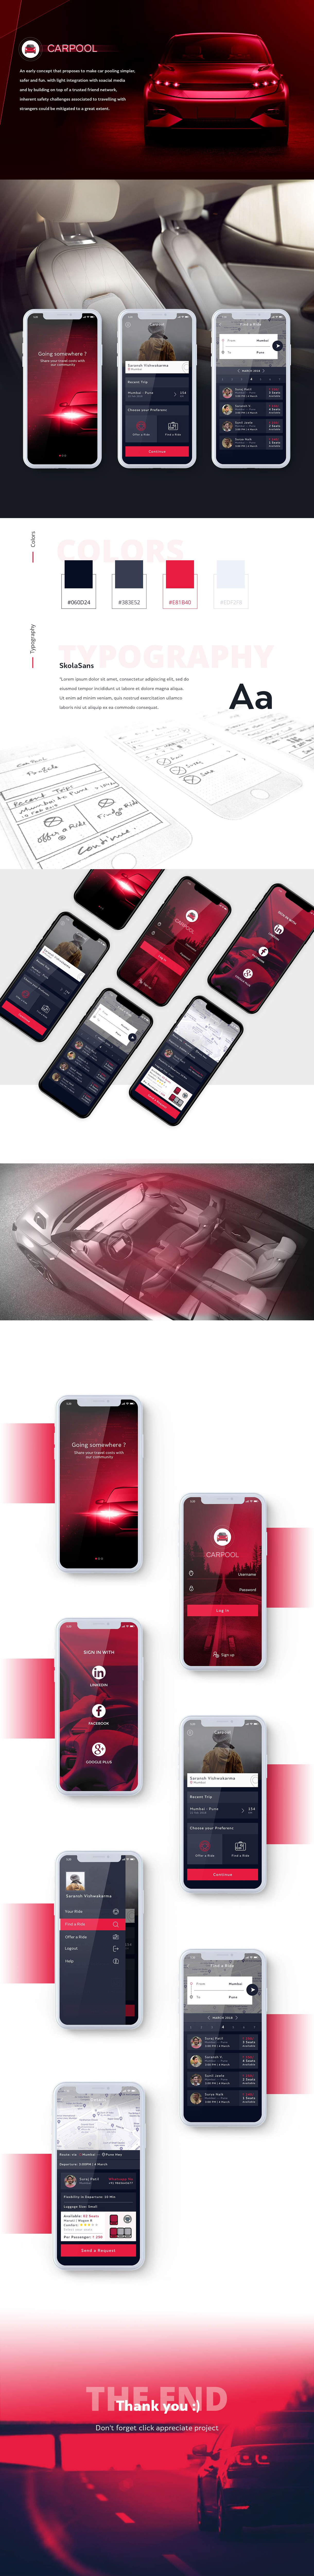 carpool car ride trip pooling UI Mobile app Interface